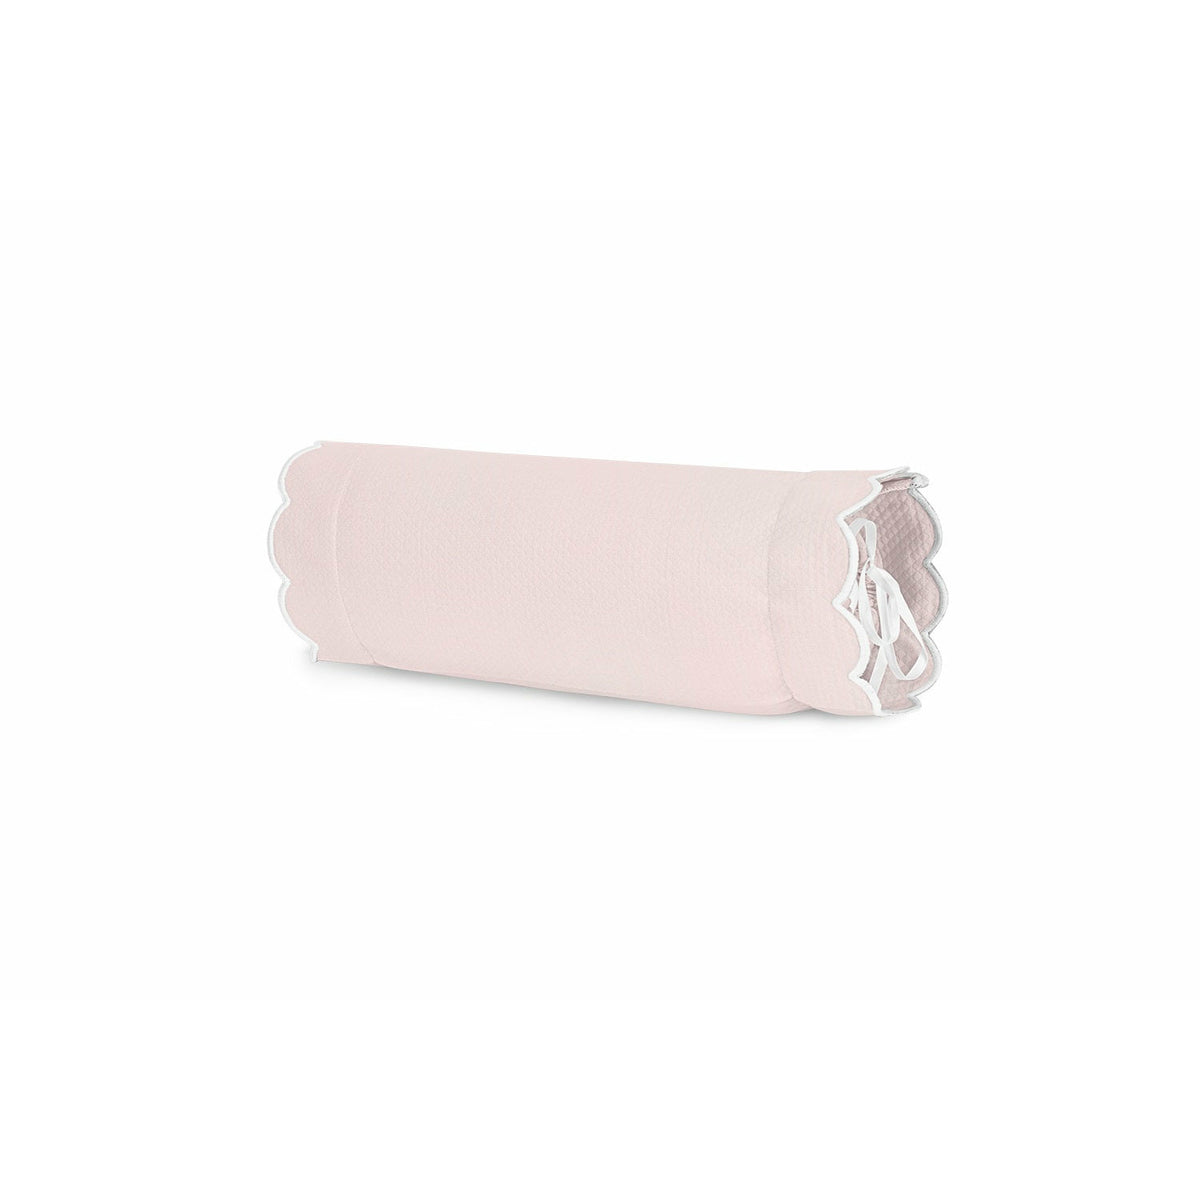 Matouk Diamond Pique Bedding Neckroll Sham Pink Fine Linens